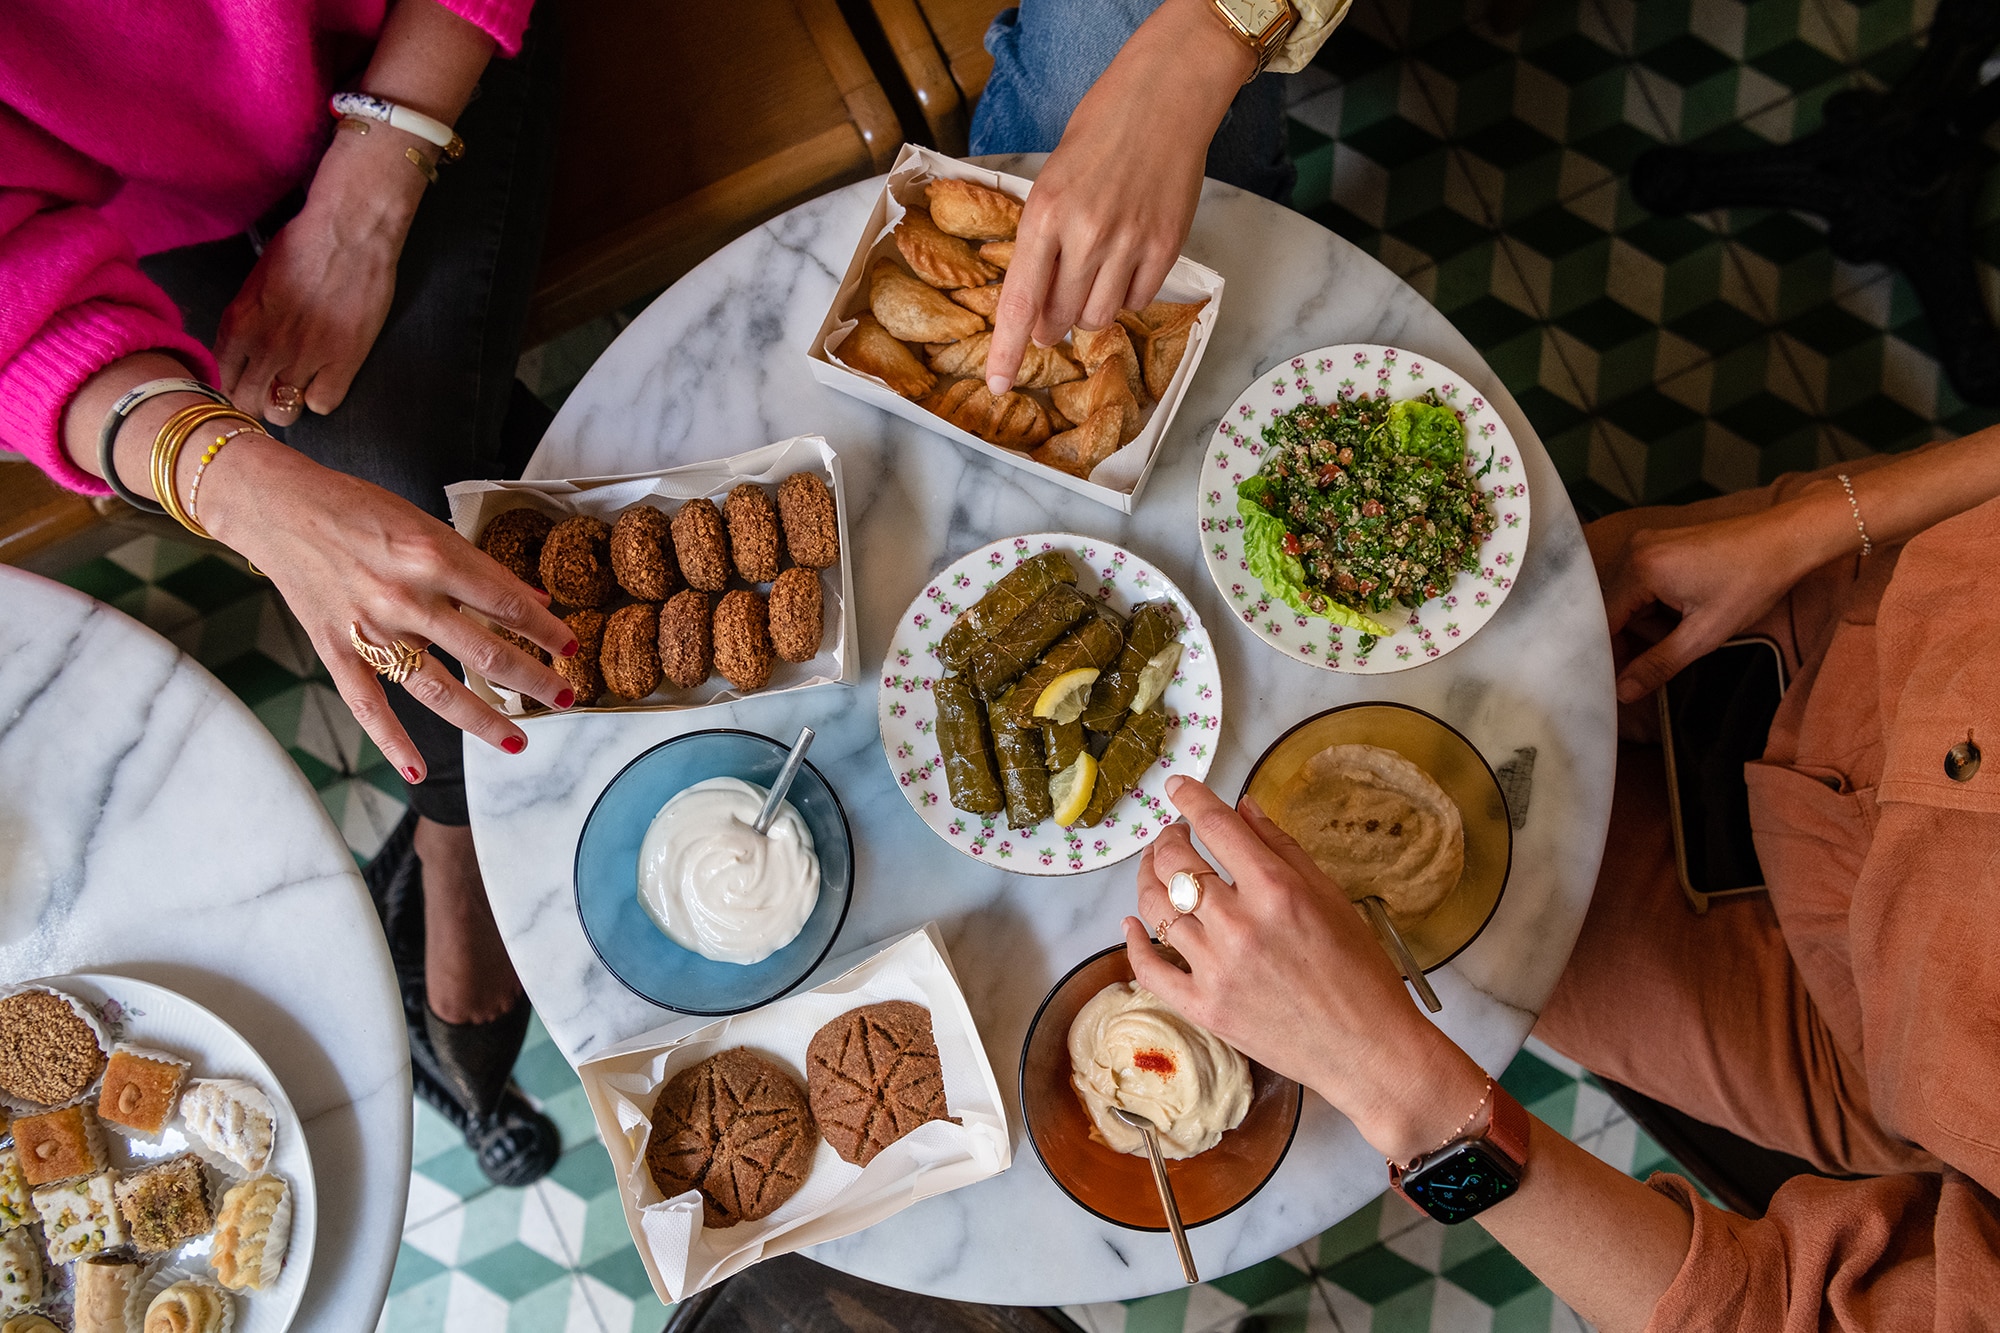 refugee food, Refugee Food : Des chefs réfugiés aux fourneaux de restaurants marseillais en juin, Made in Marseille